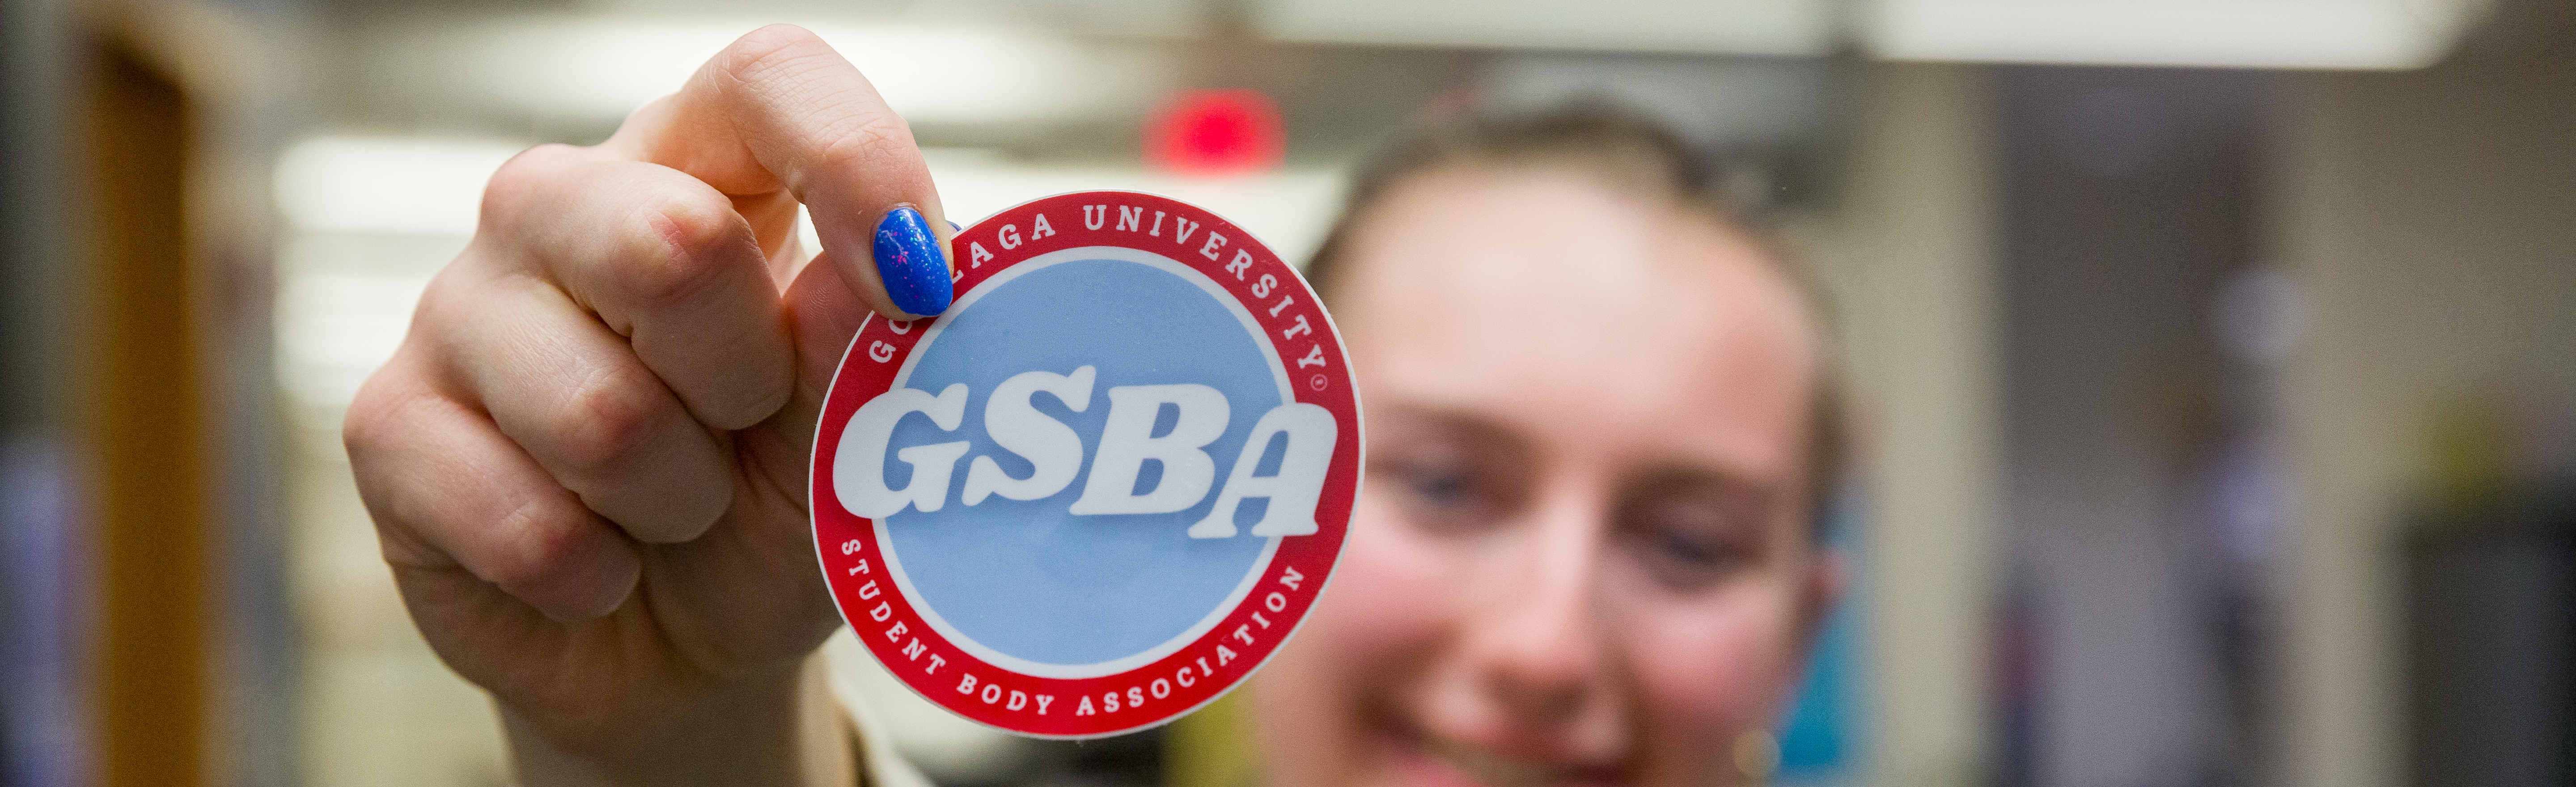 Student displaying a GSBA sticker